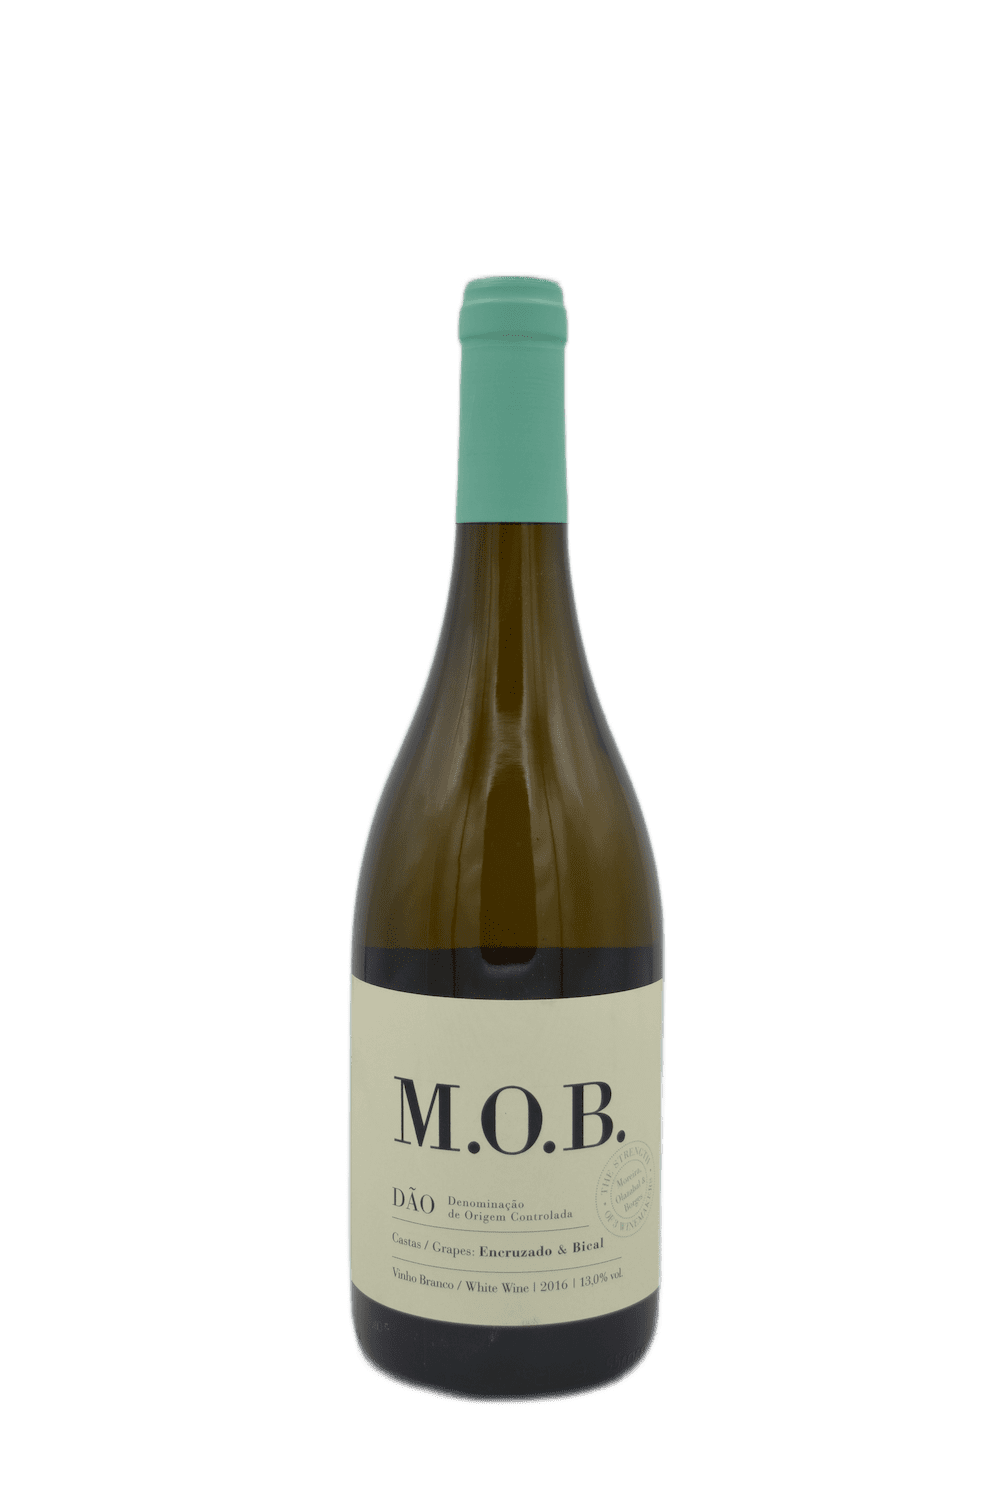 M.O.B. Vinho Branco 2016